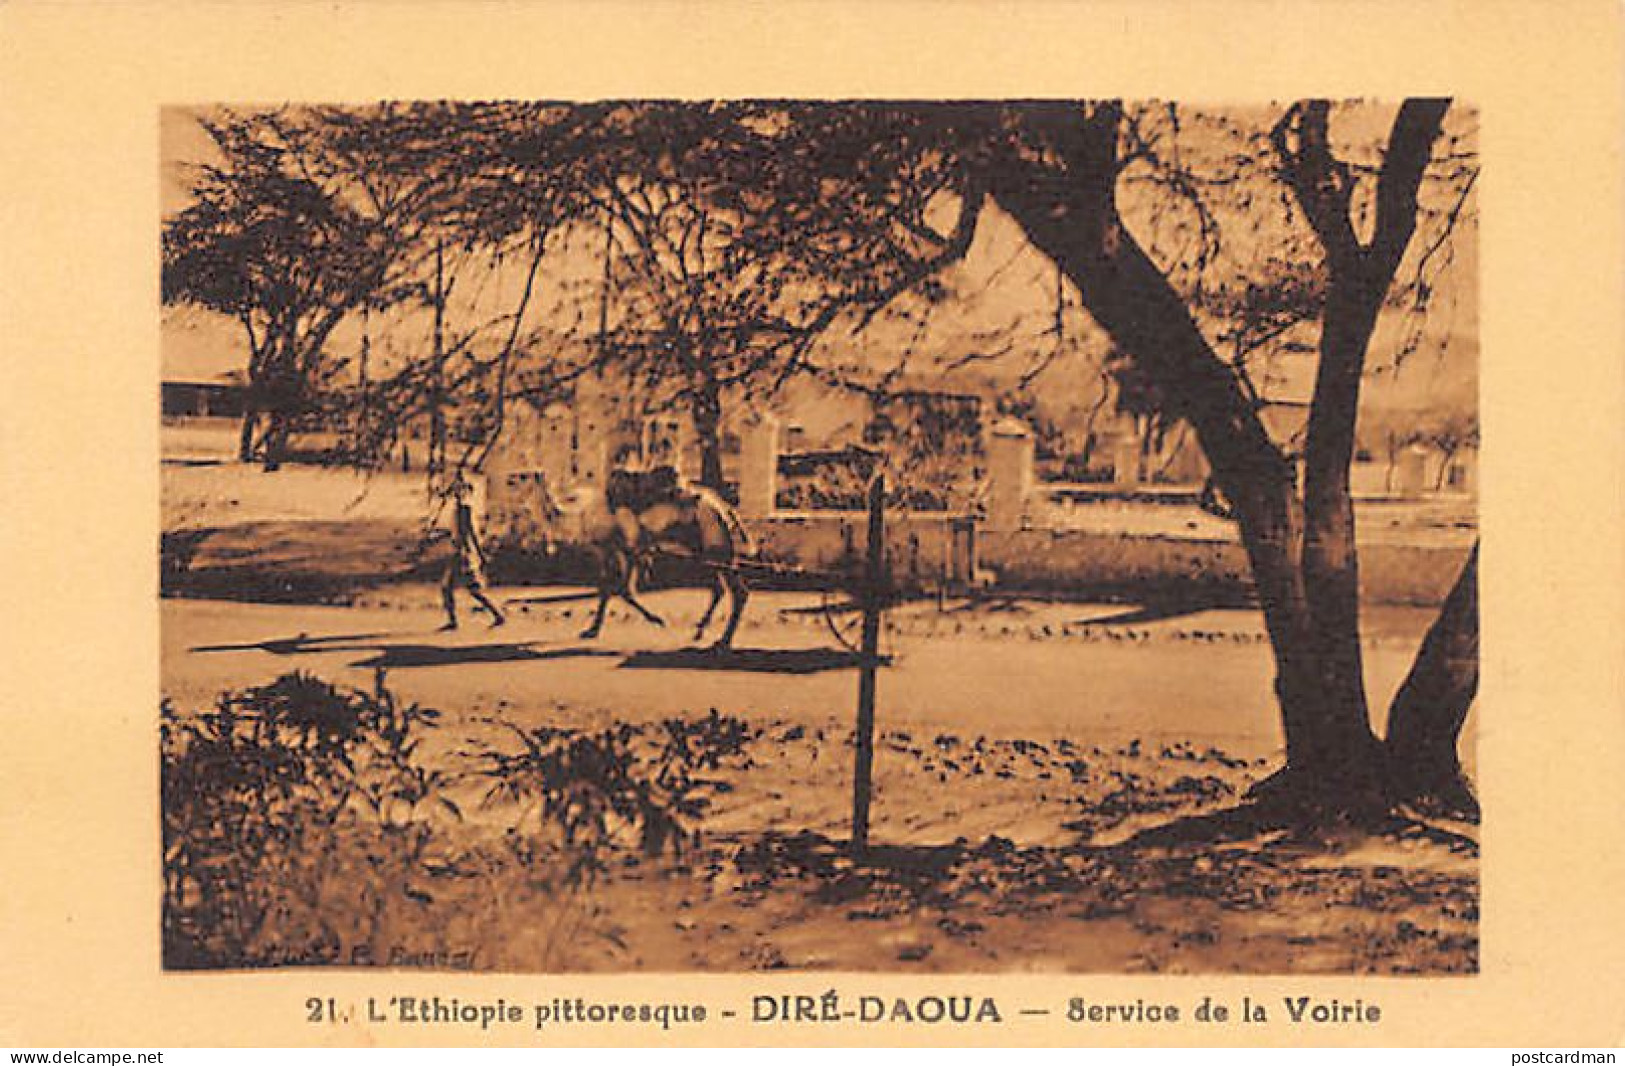 Ethiopia - DIRE DAWA - Roads Department - Publ. Printing Works Of The Dire Dawa Catholic Mission - Photographer P. Baudr - Ethiopie